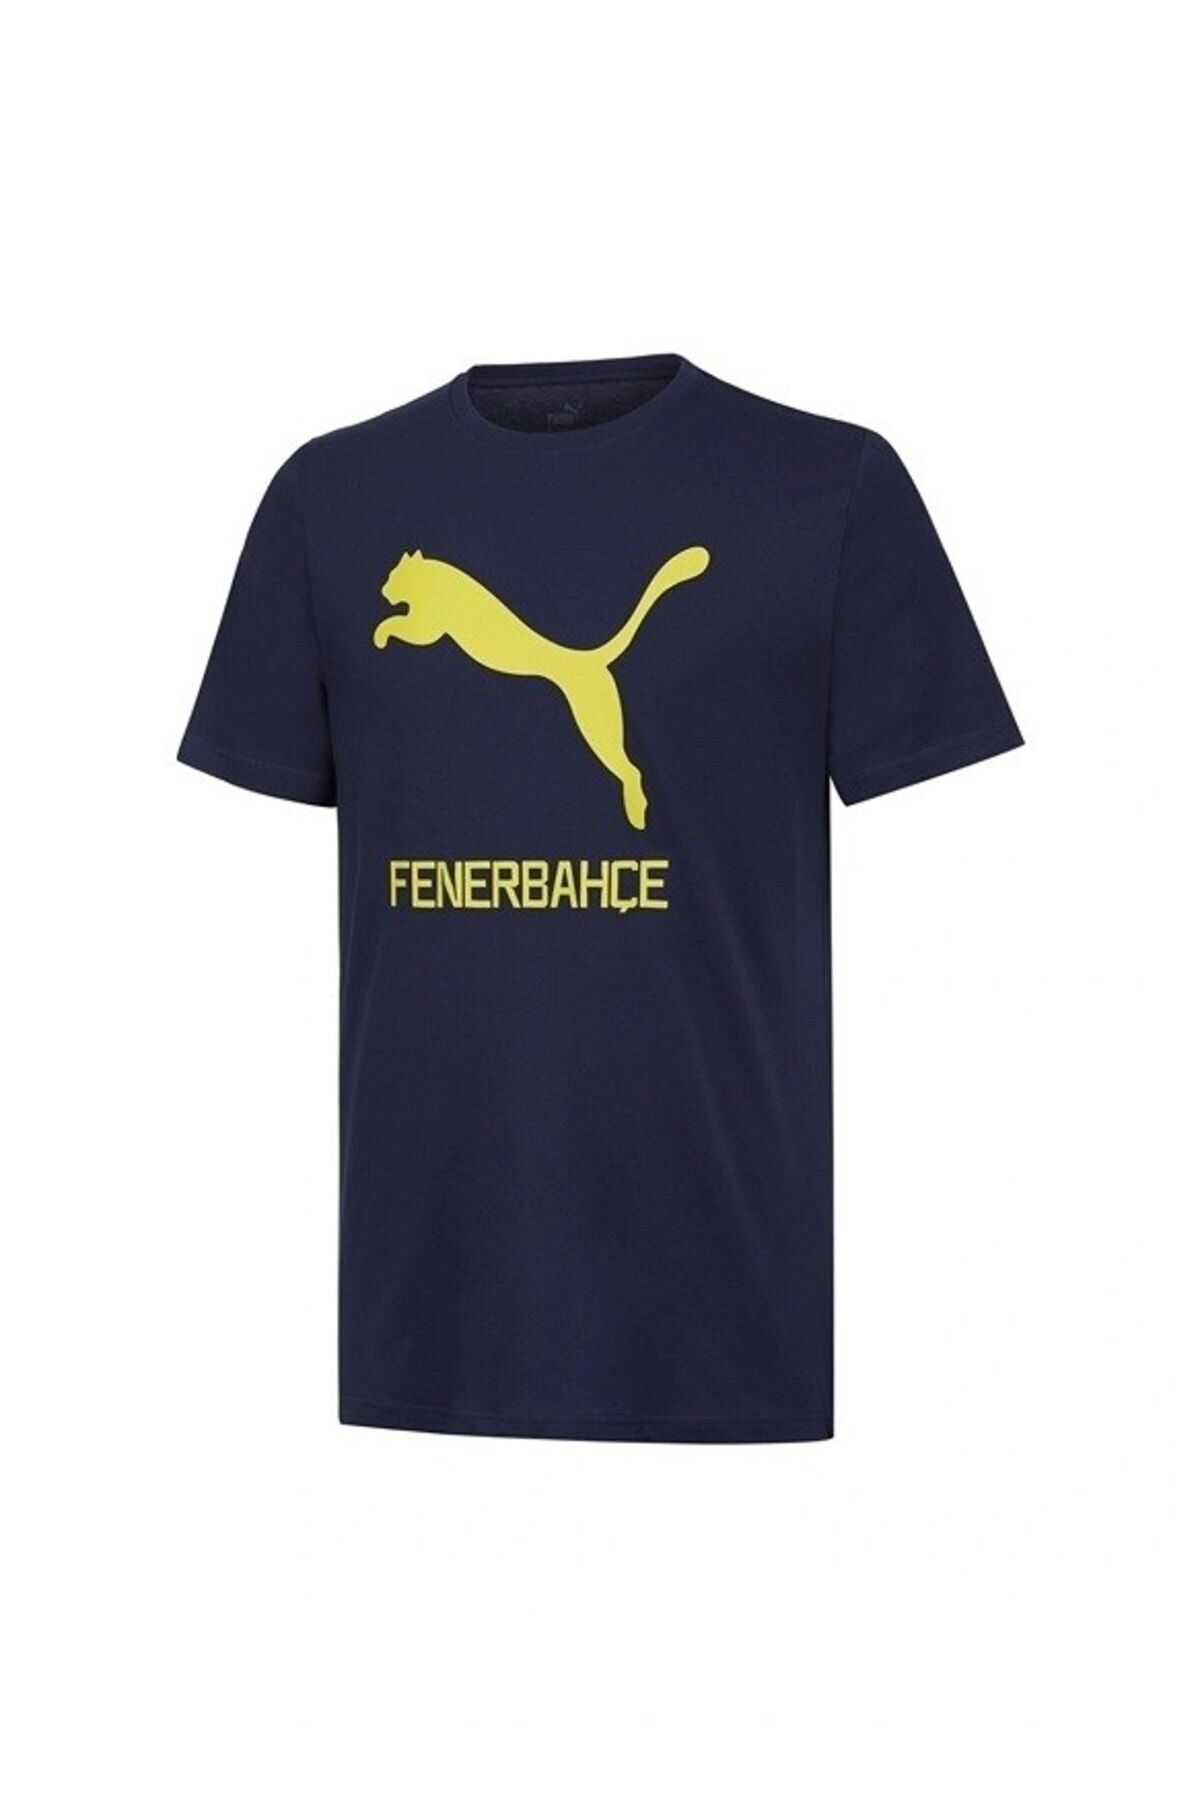 Fenerbahçe Puma Fenerbahçe Cat Tee Erkek Fenerbahçe Futbol Tişörtü 77313601